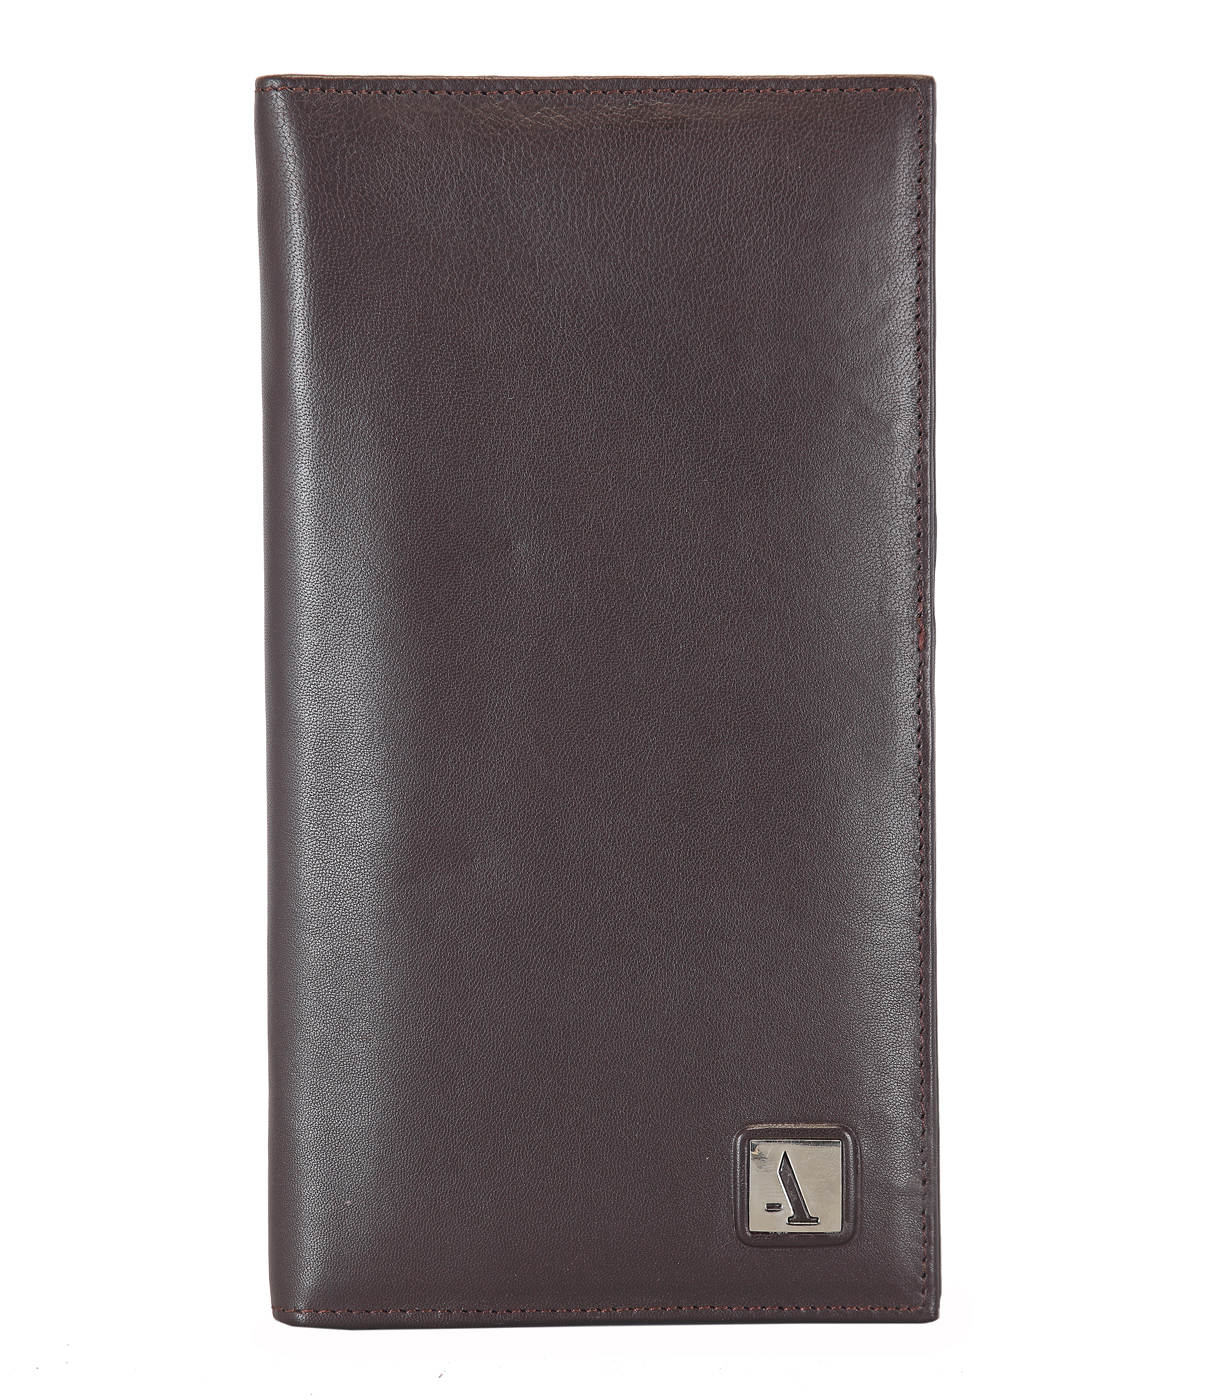 W10-Novio-Travel Document Wallet In Soft Genuine Leather - Brown